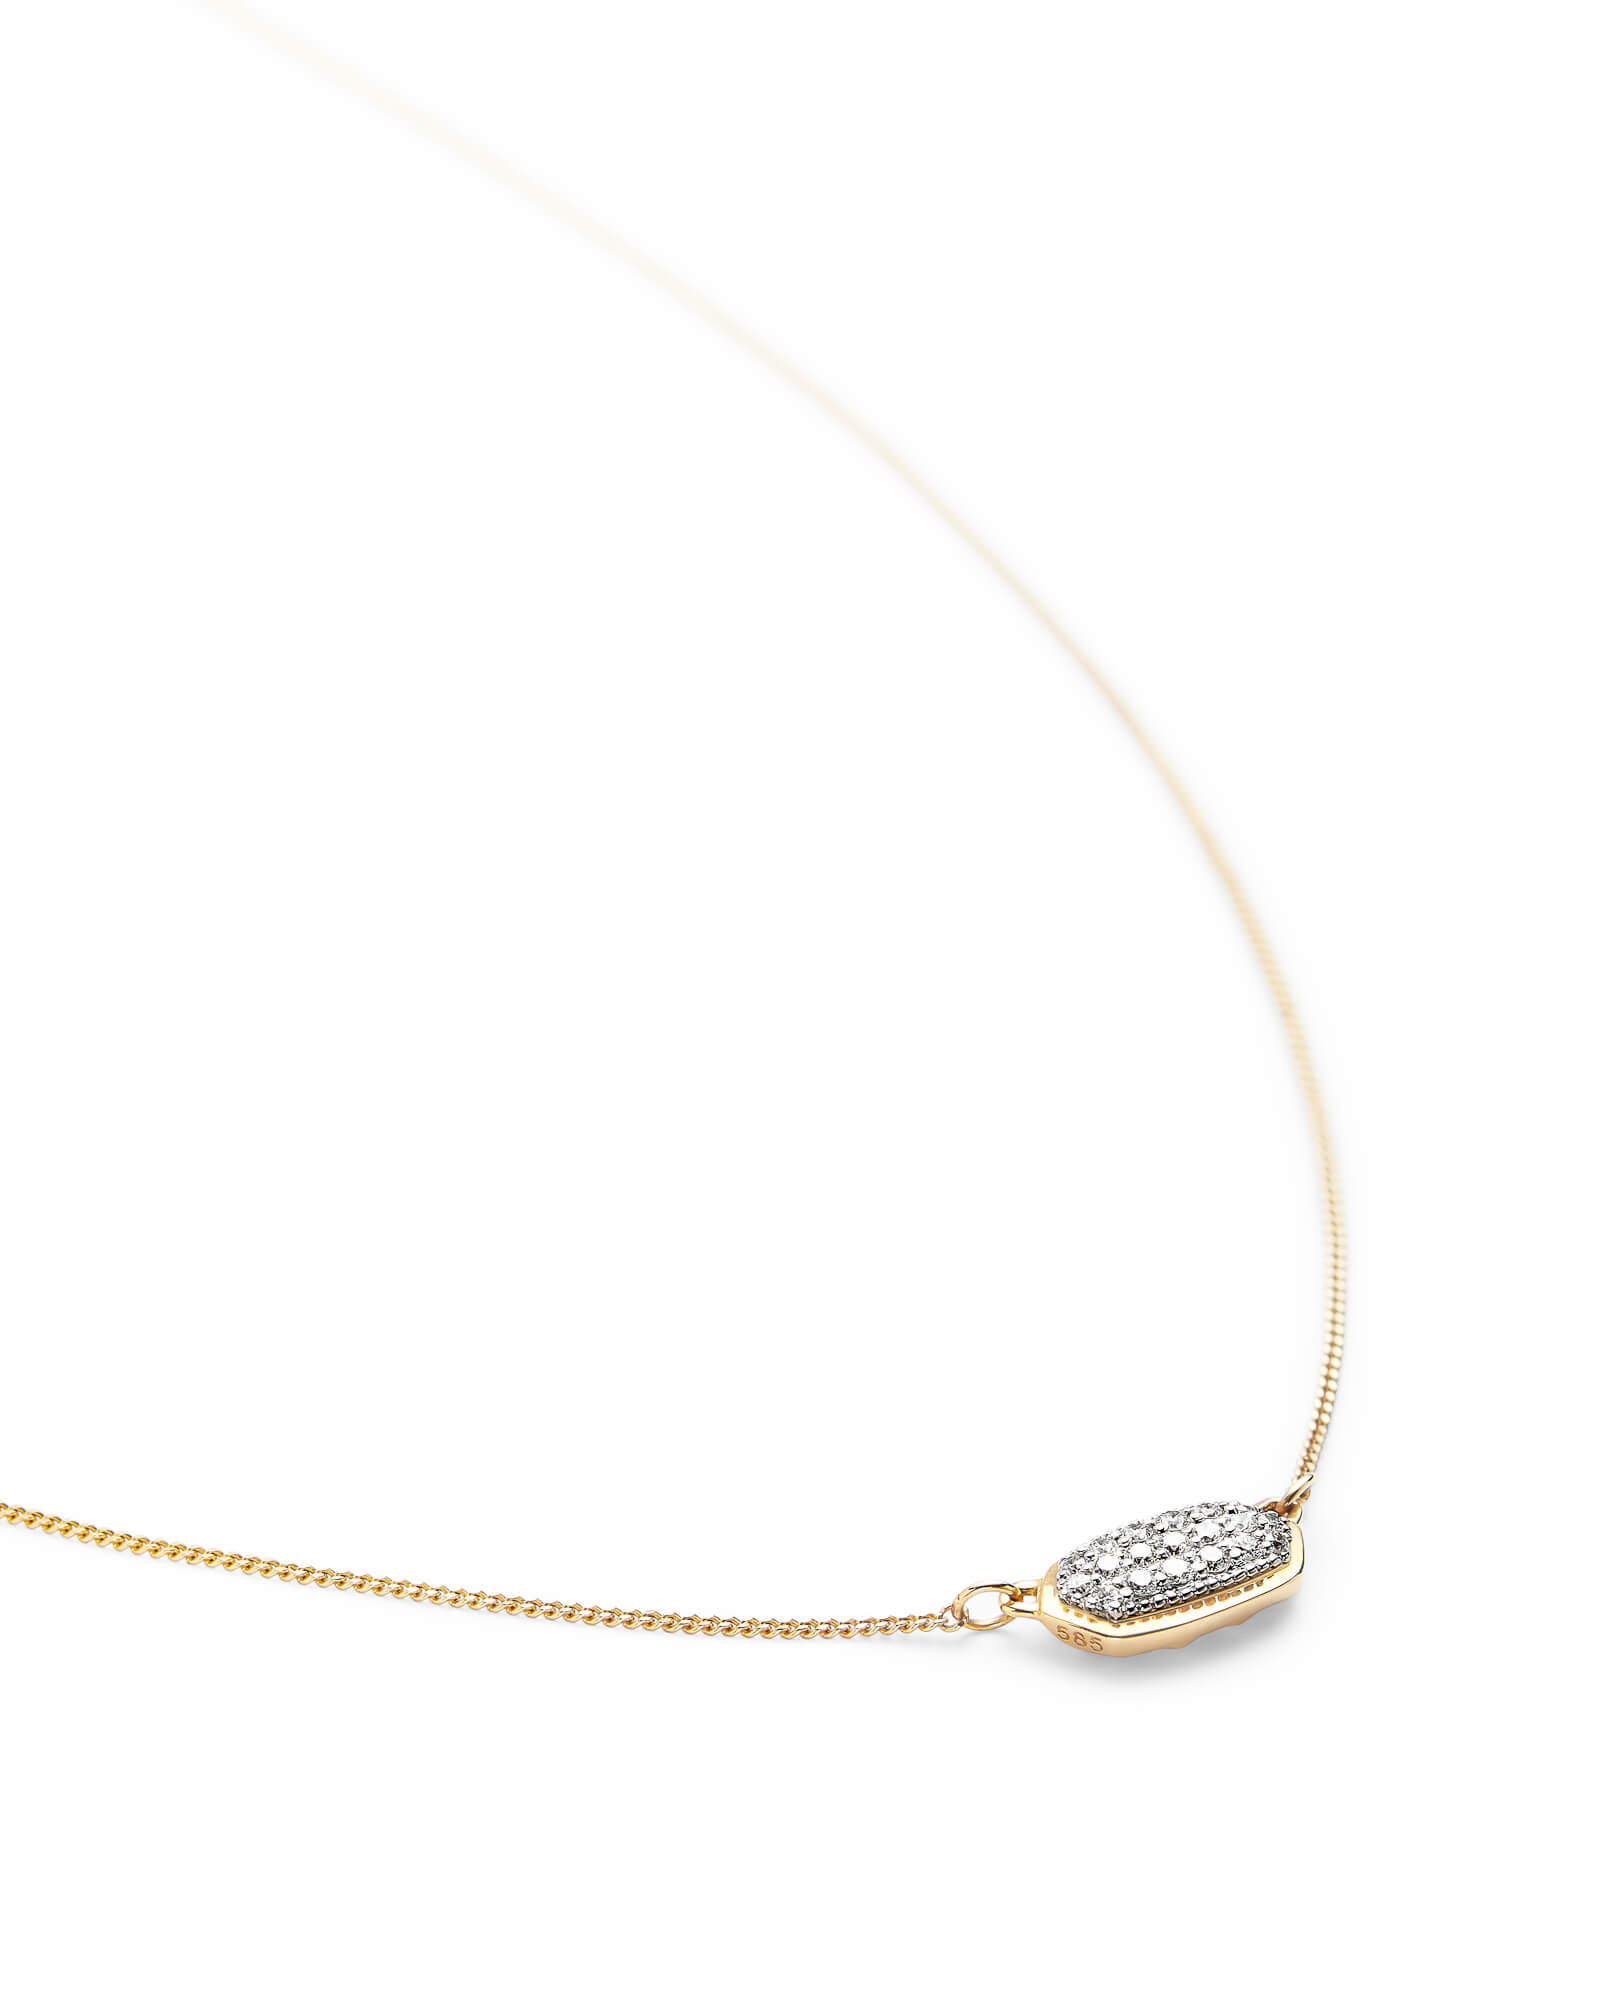 Kendra Scott Lisa Pendant Necklace in Pave Diamond and 14k Yellow Gold | Diamonds